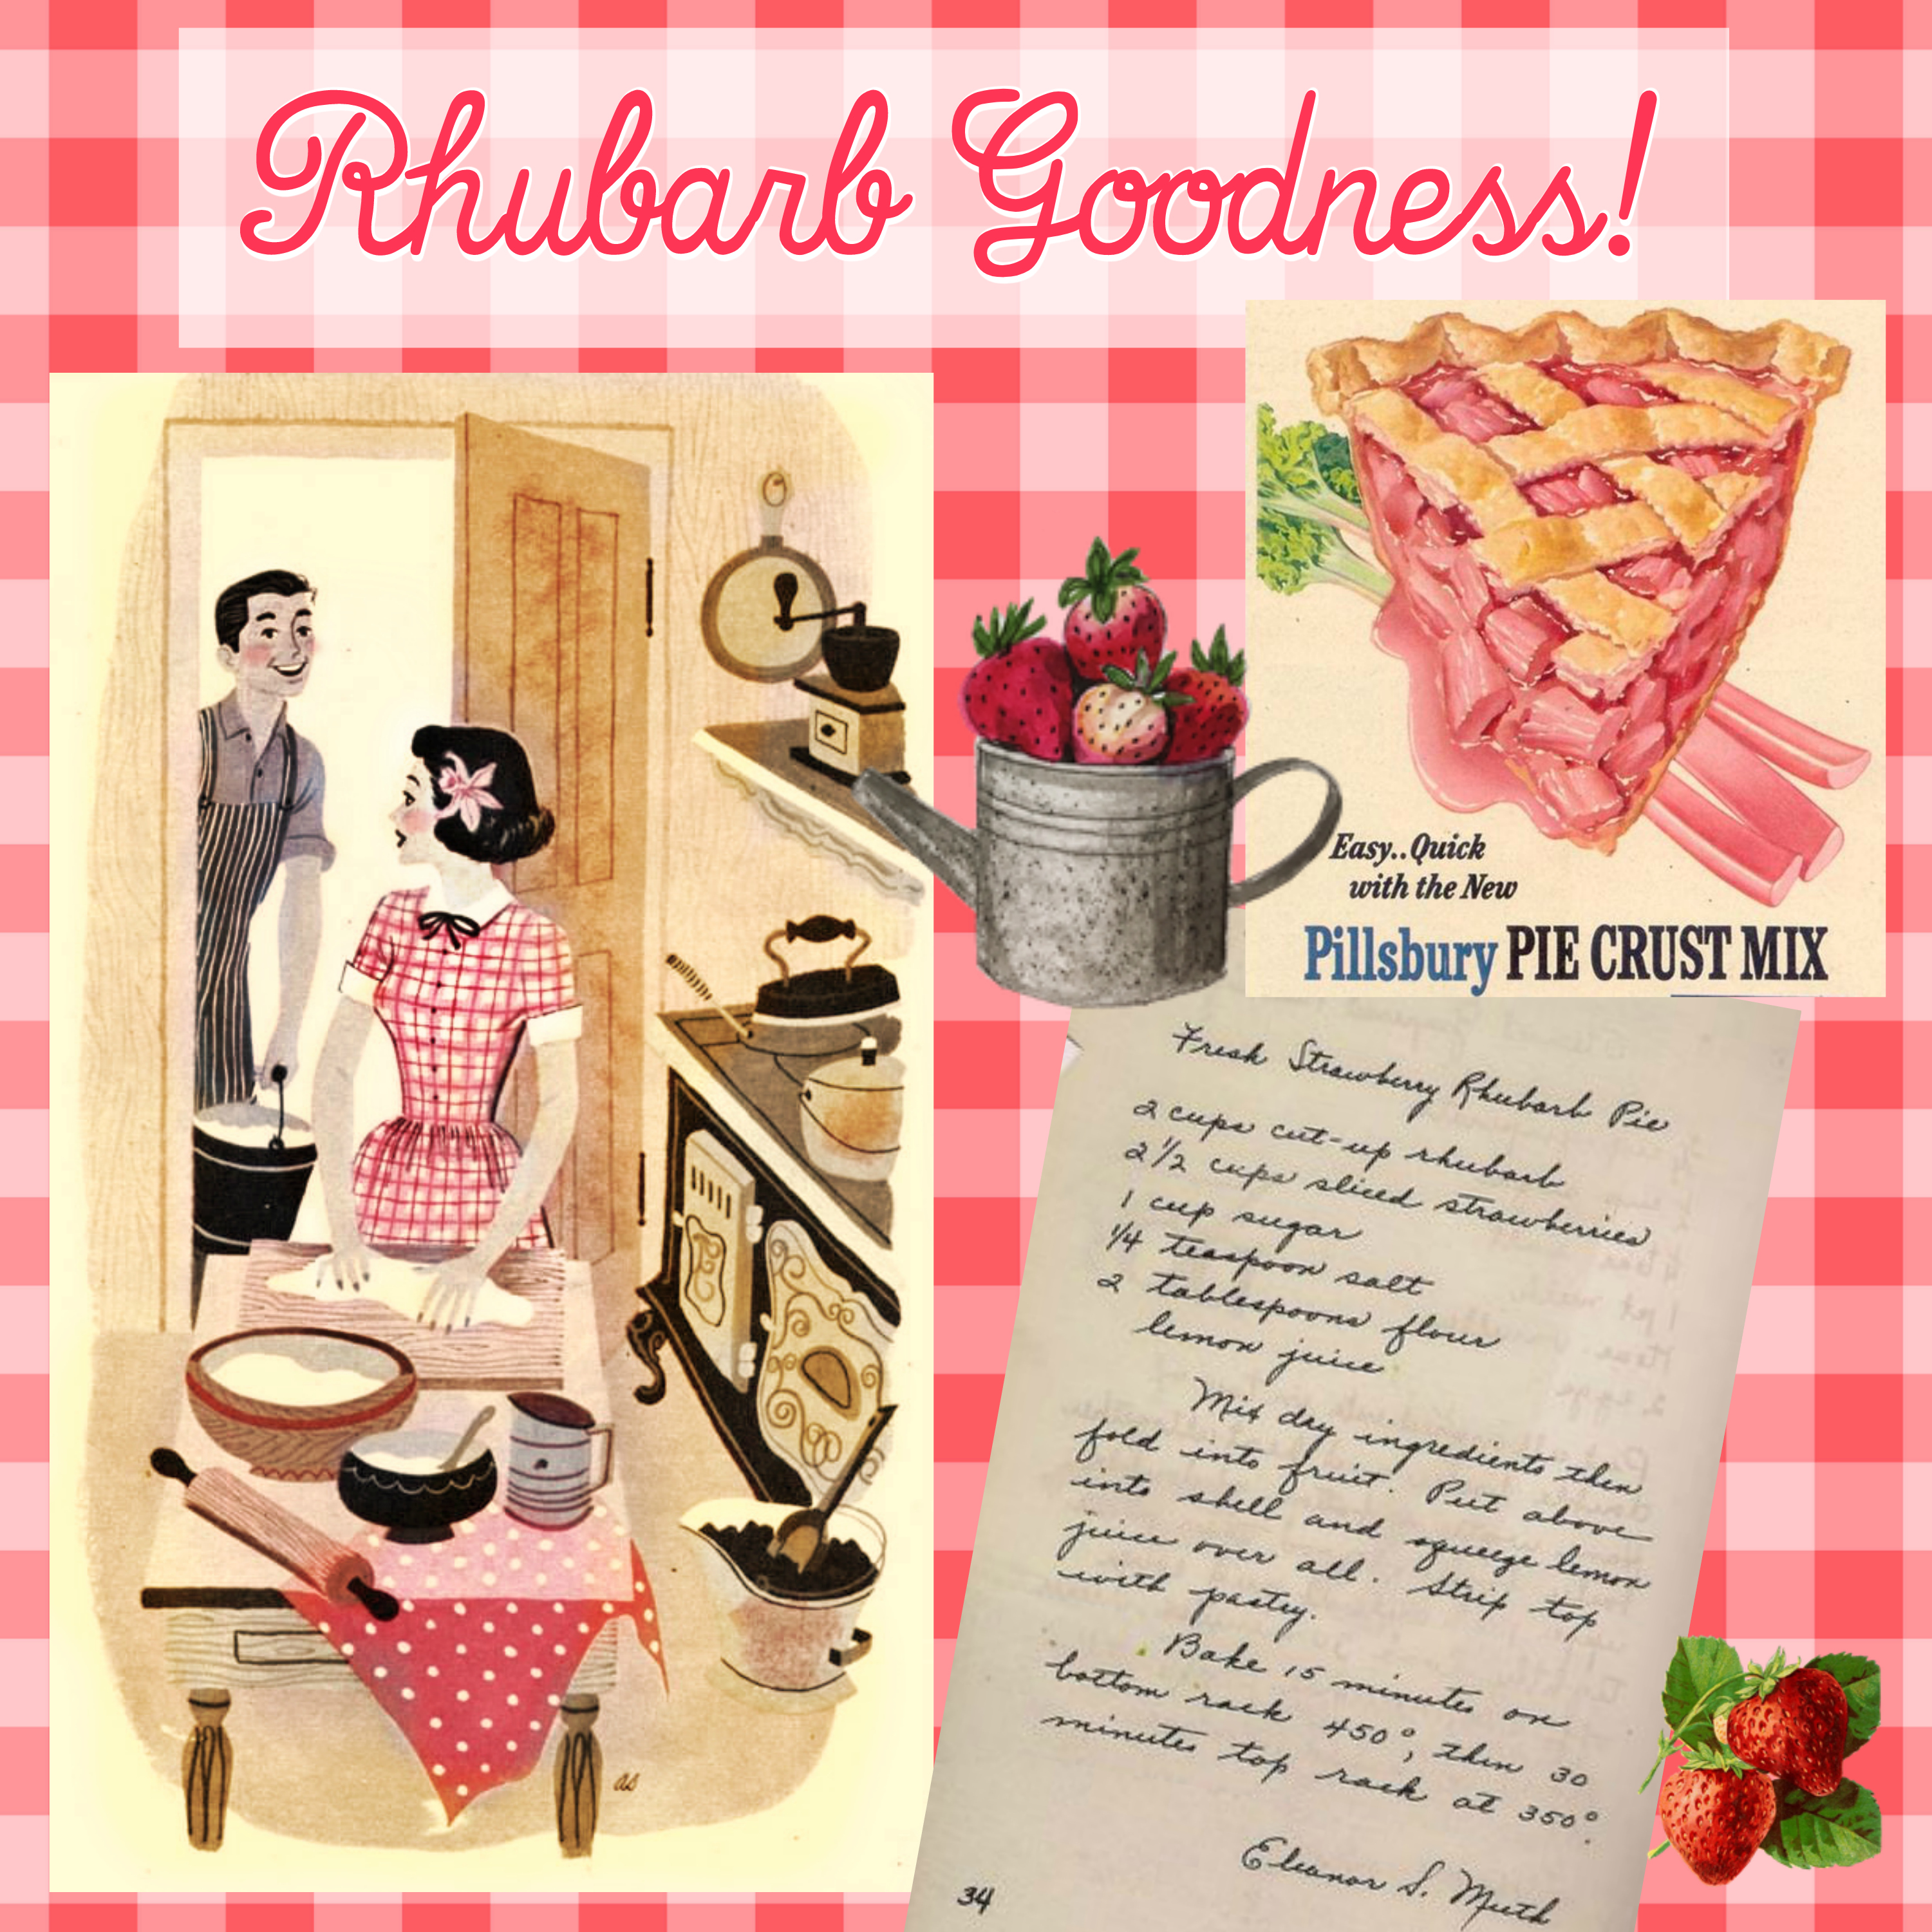 rhubarb goodness 2